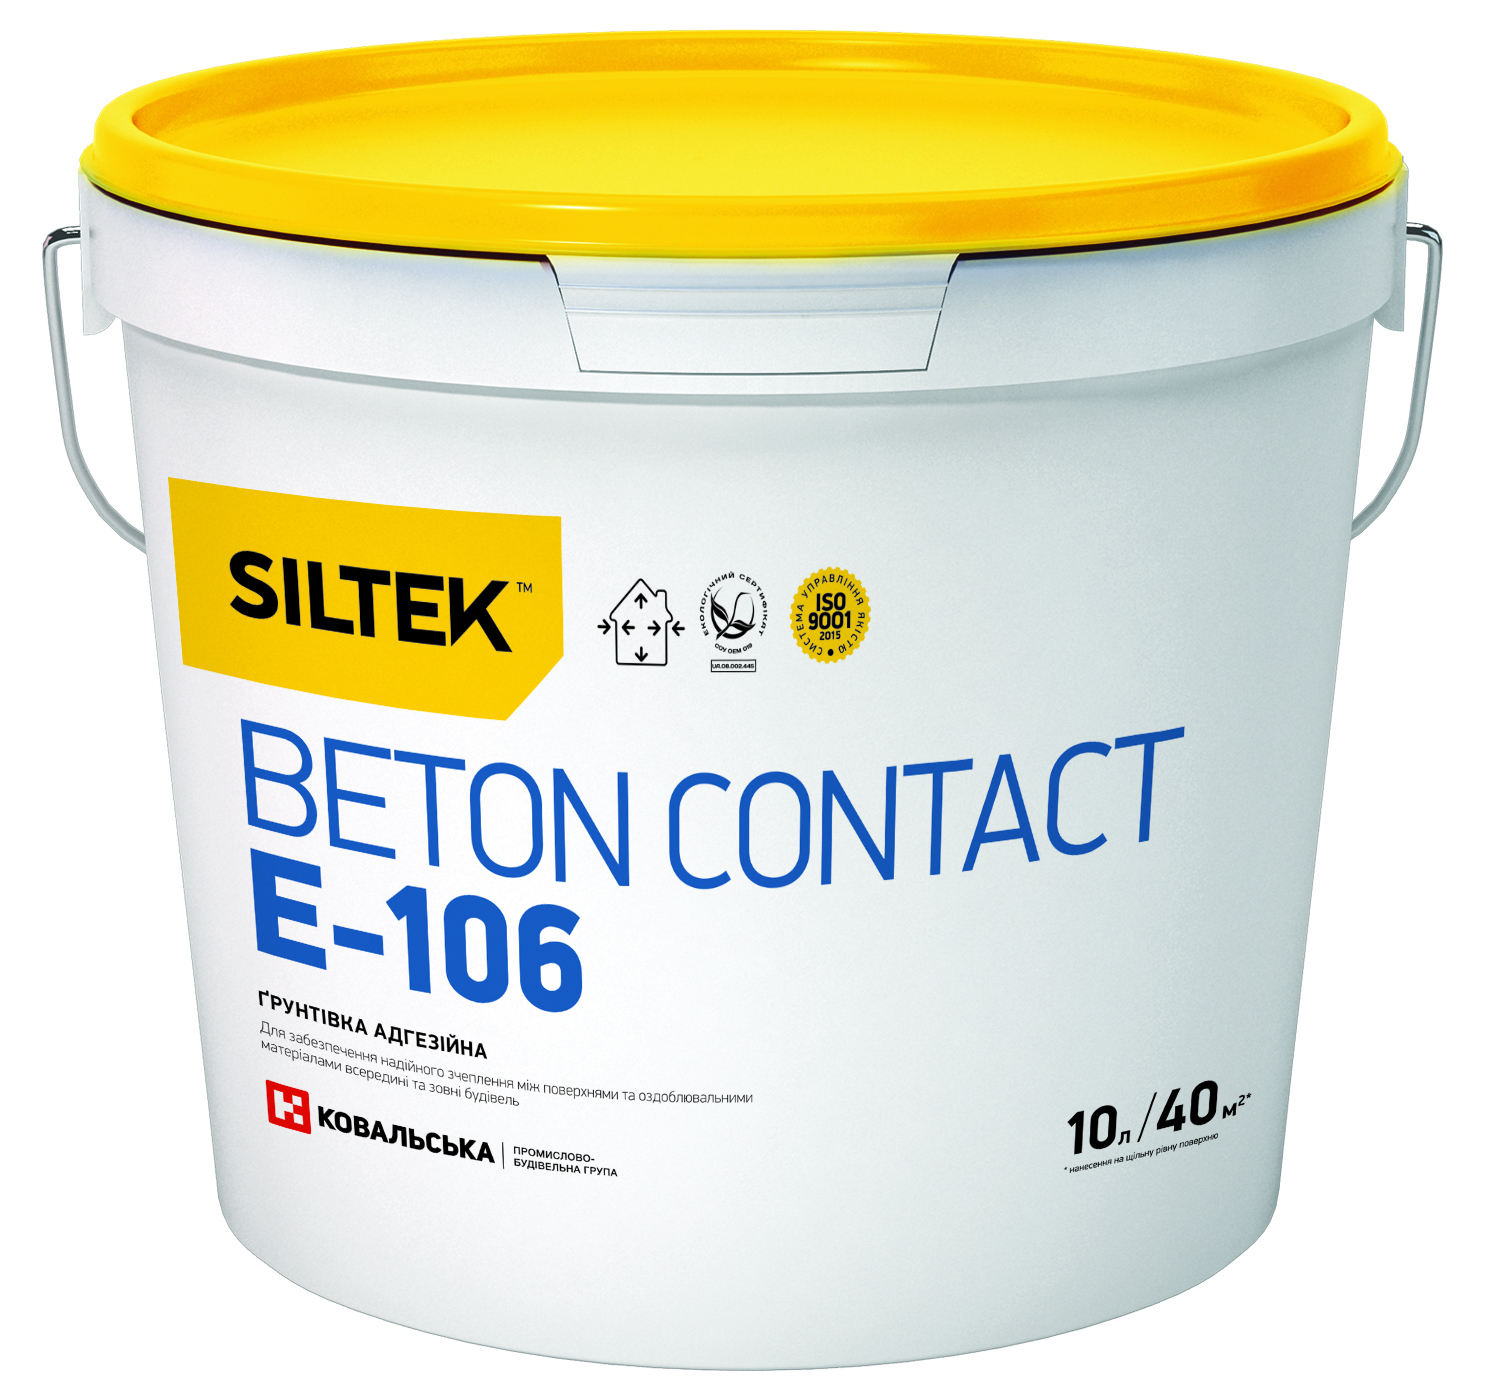 SILTEK BETON CONTACT E-106 грунтовка адгезійна